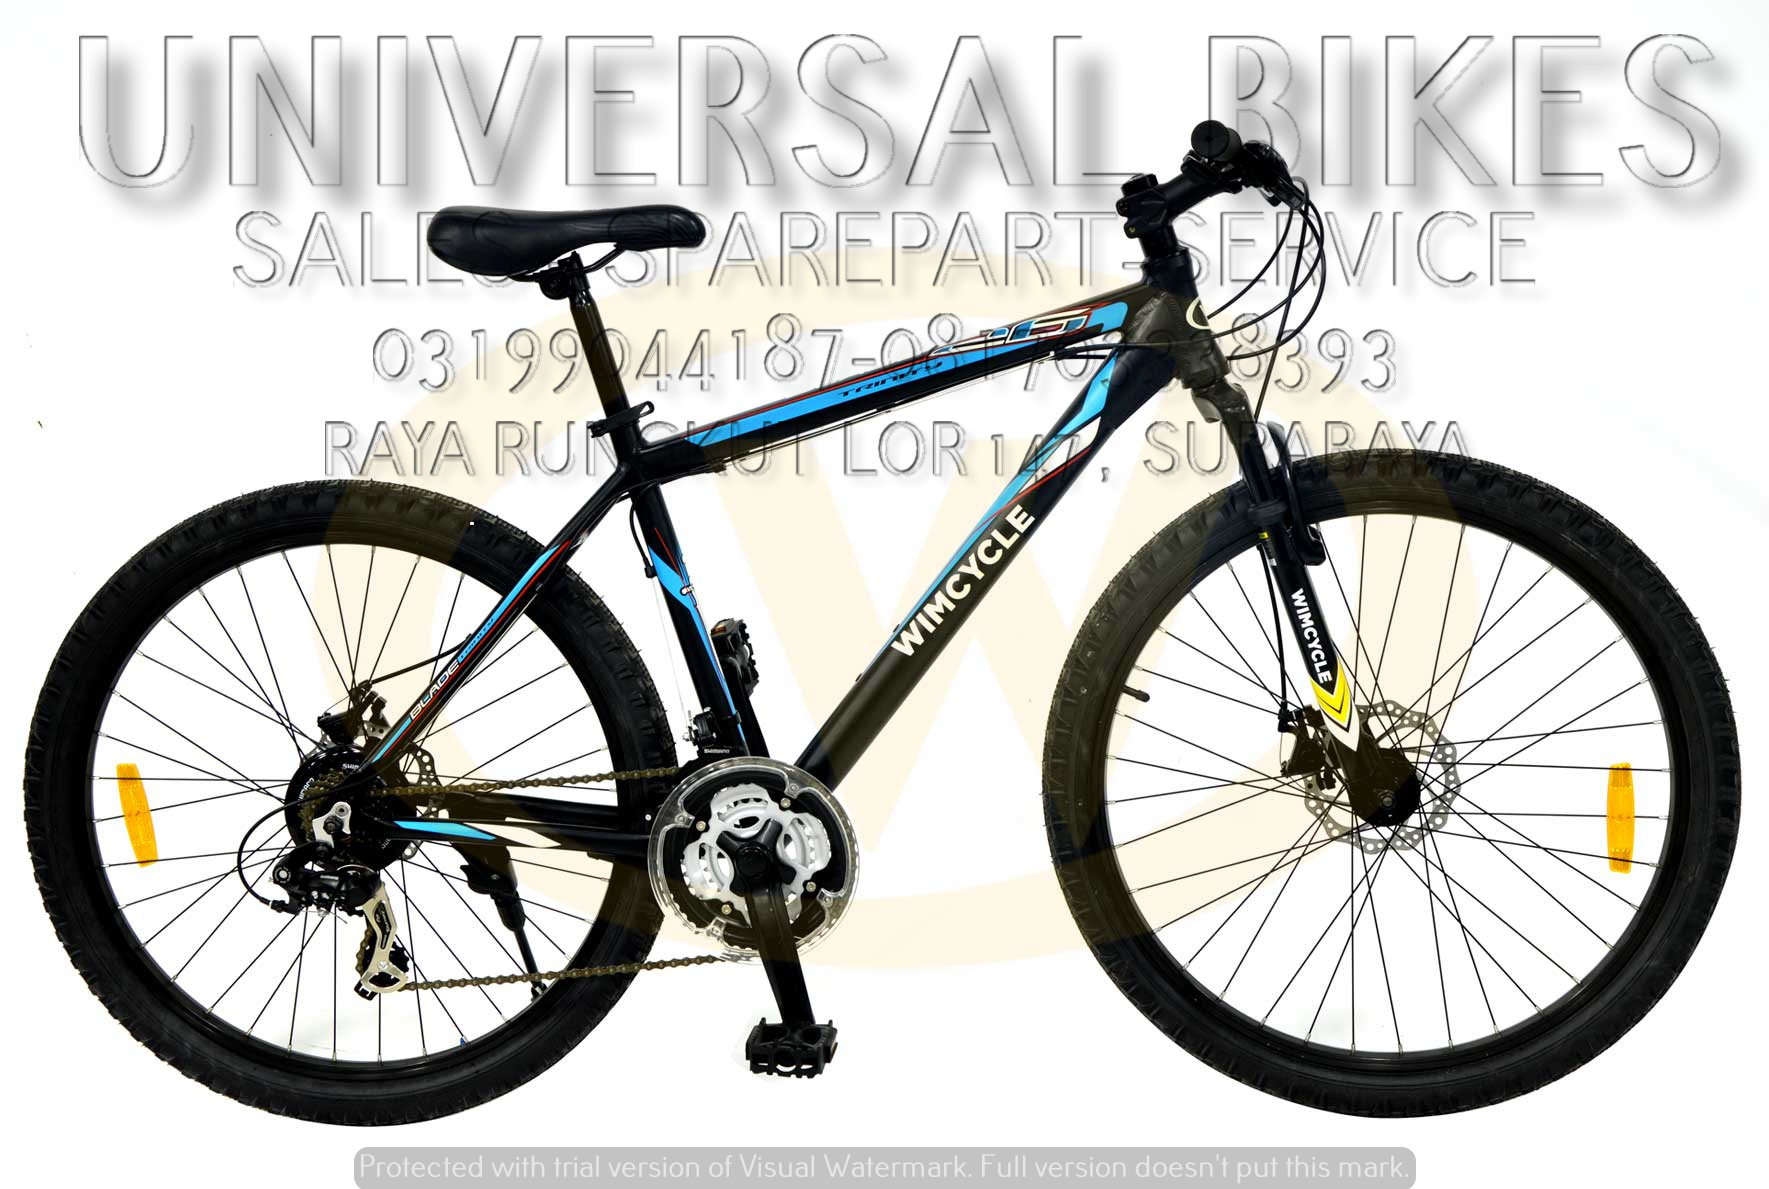  harga sepeda bmx wimcycle surabaya 081703338393 grosir 